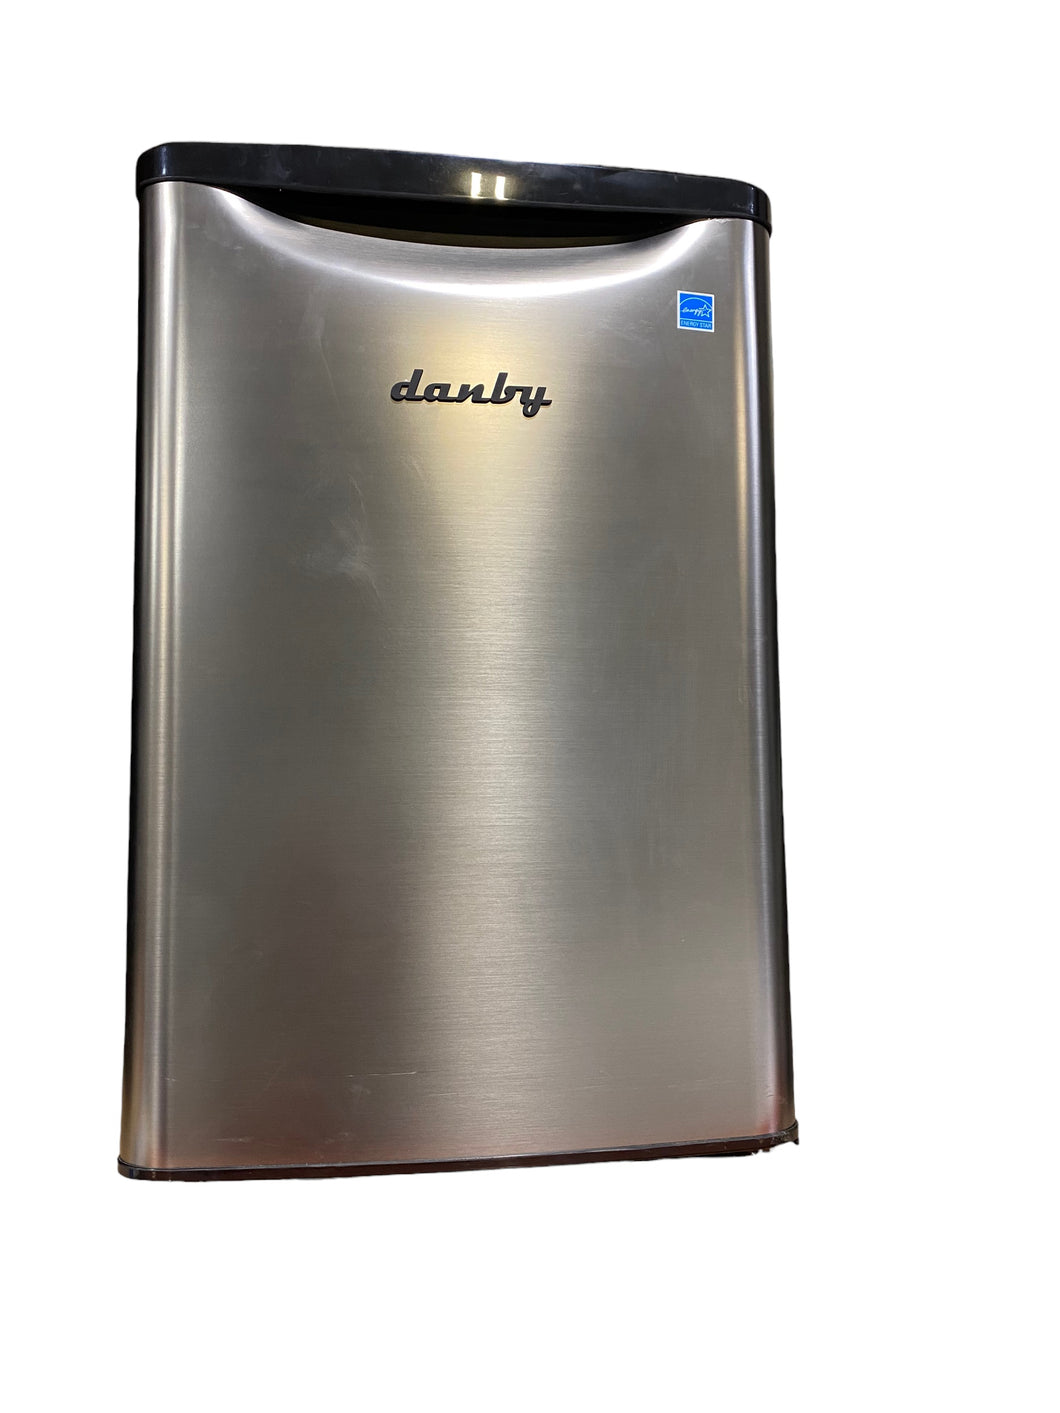 Danby 2.6 Cu. Ft. Glass Door Mini Fridge Compact Refrigerator